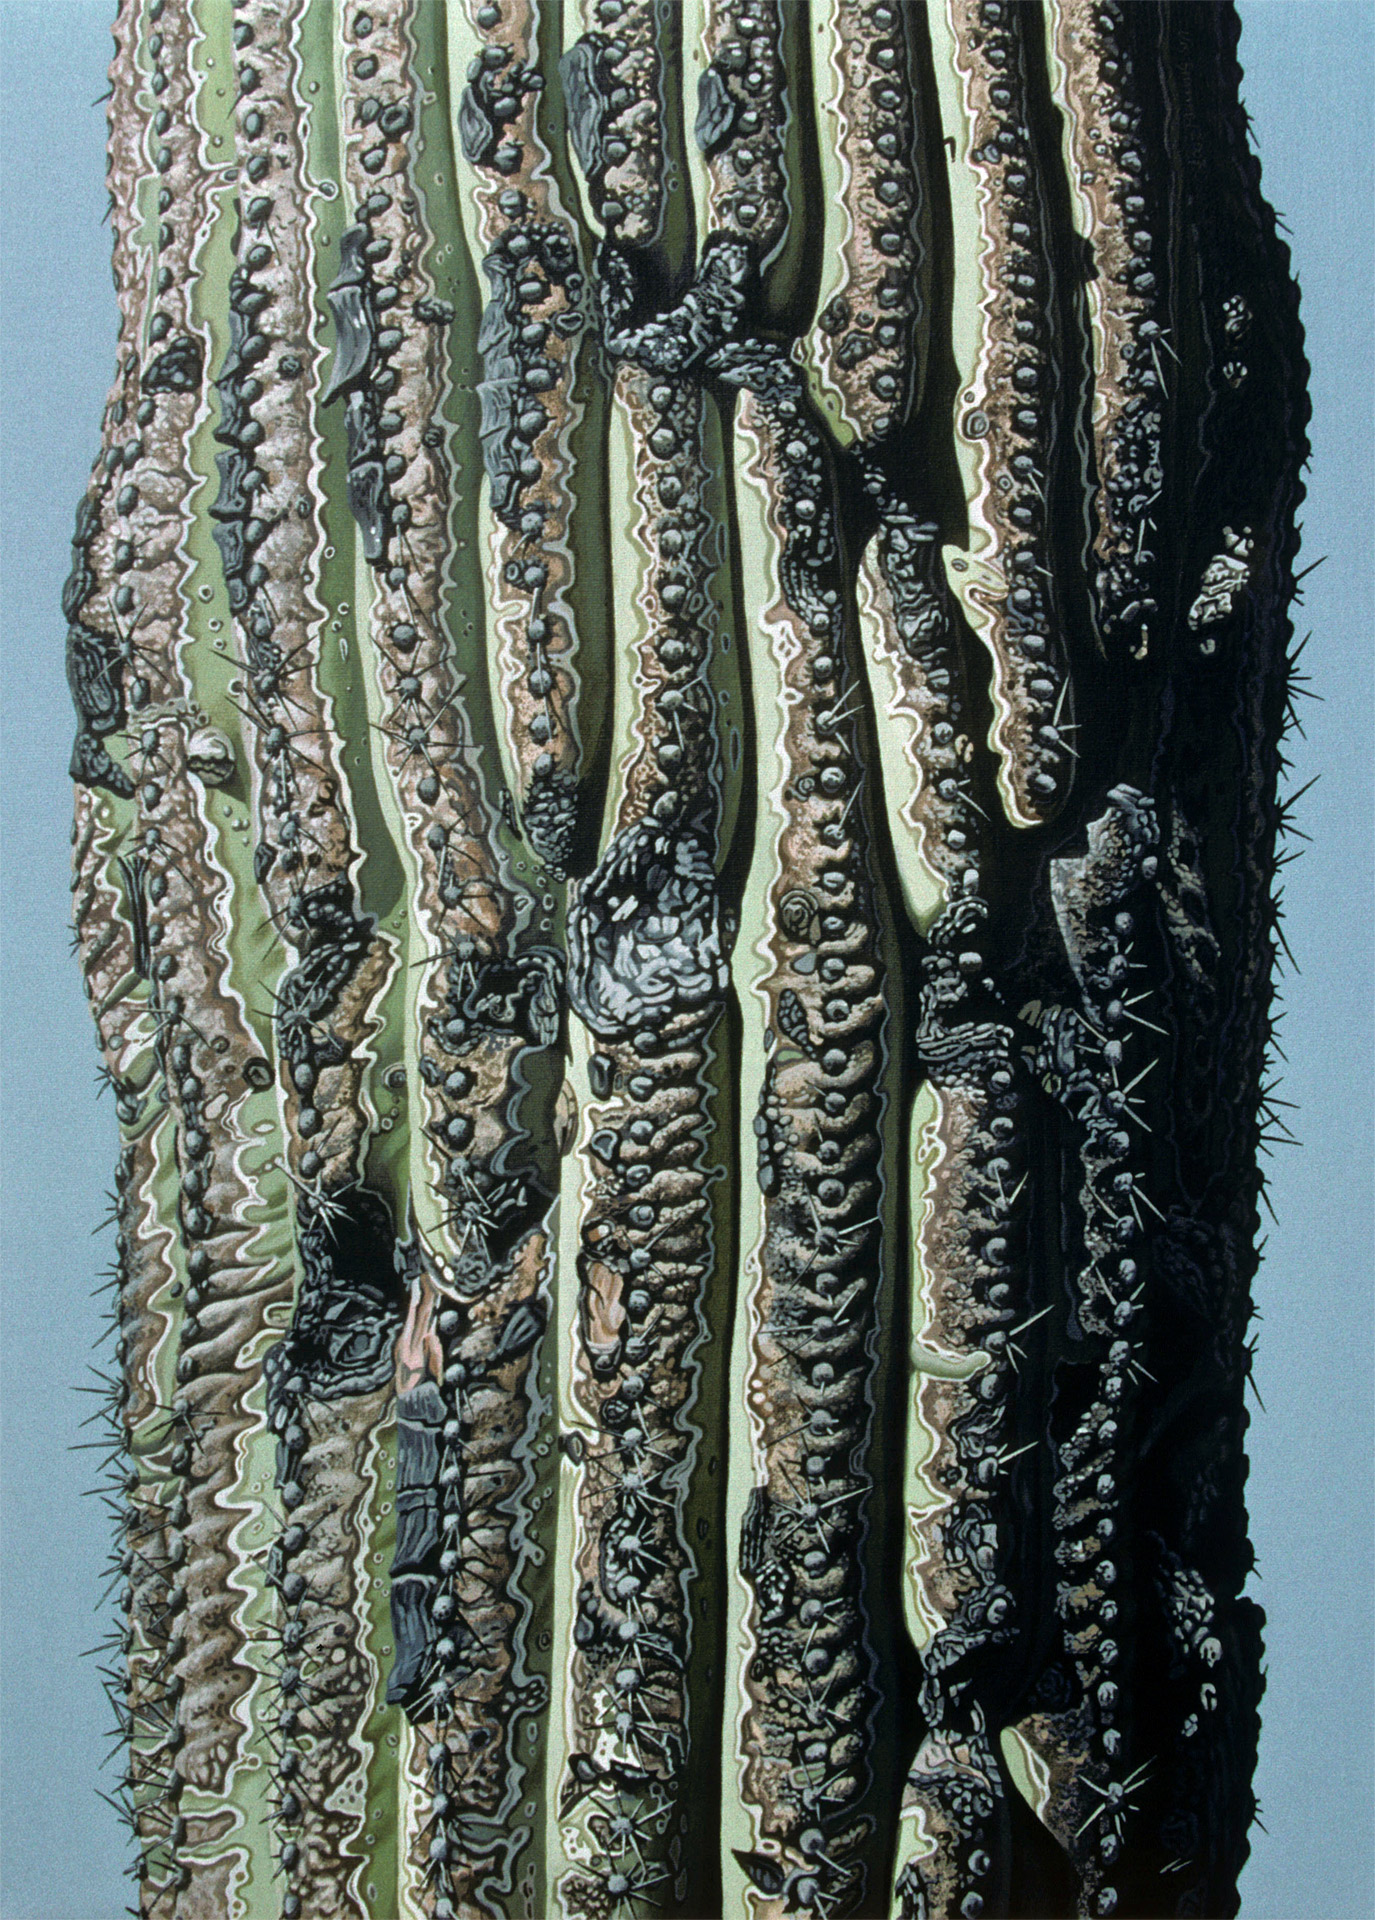 Saguaro-Stamm (Massstab 1:1), 2007, Acryl auf Leinwand, 70 x 50 cm